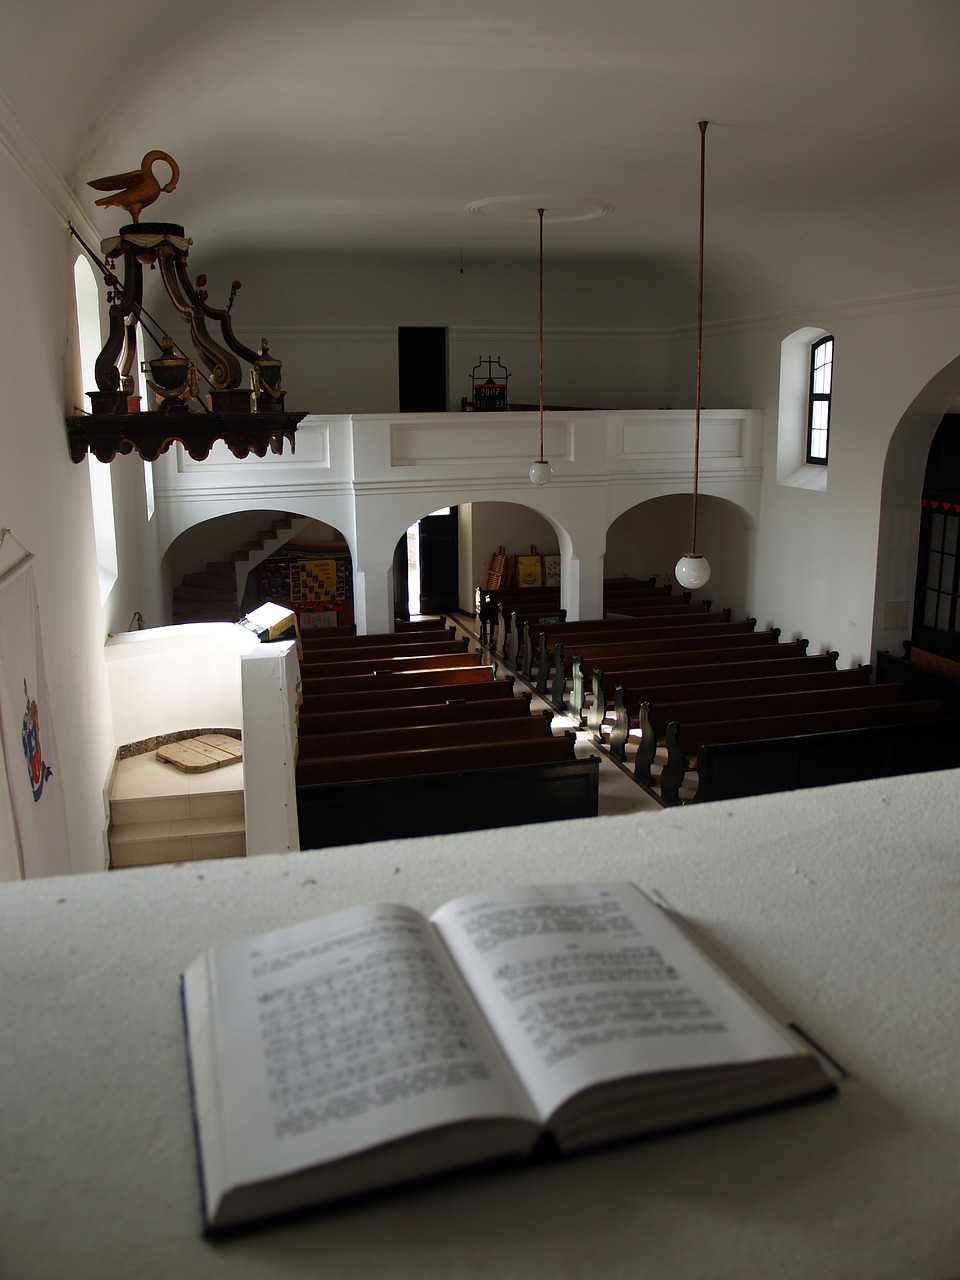 kopács reformed church organ free photo